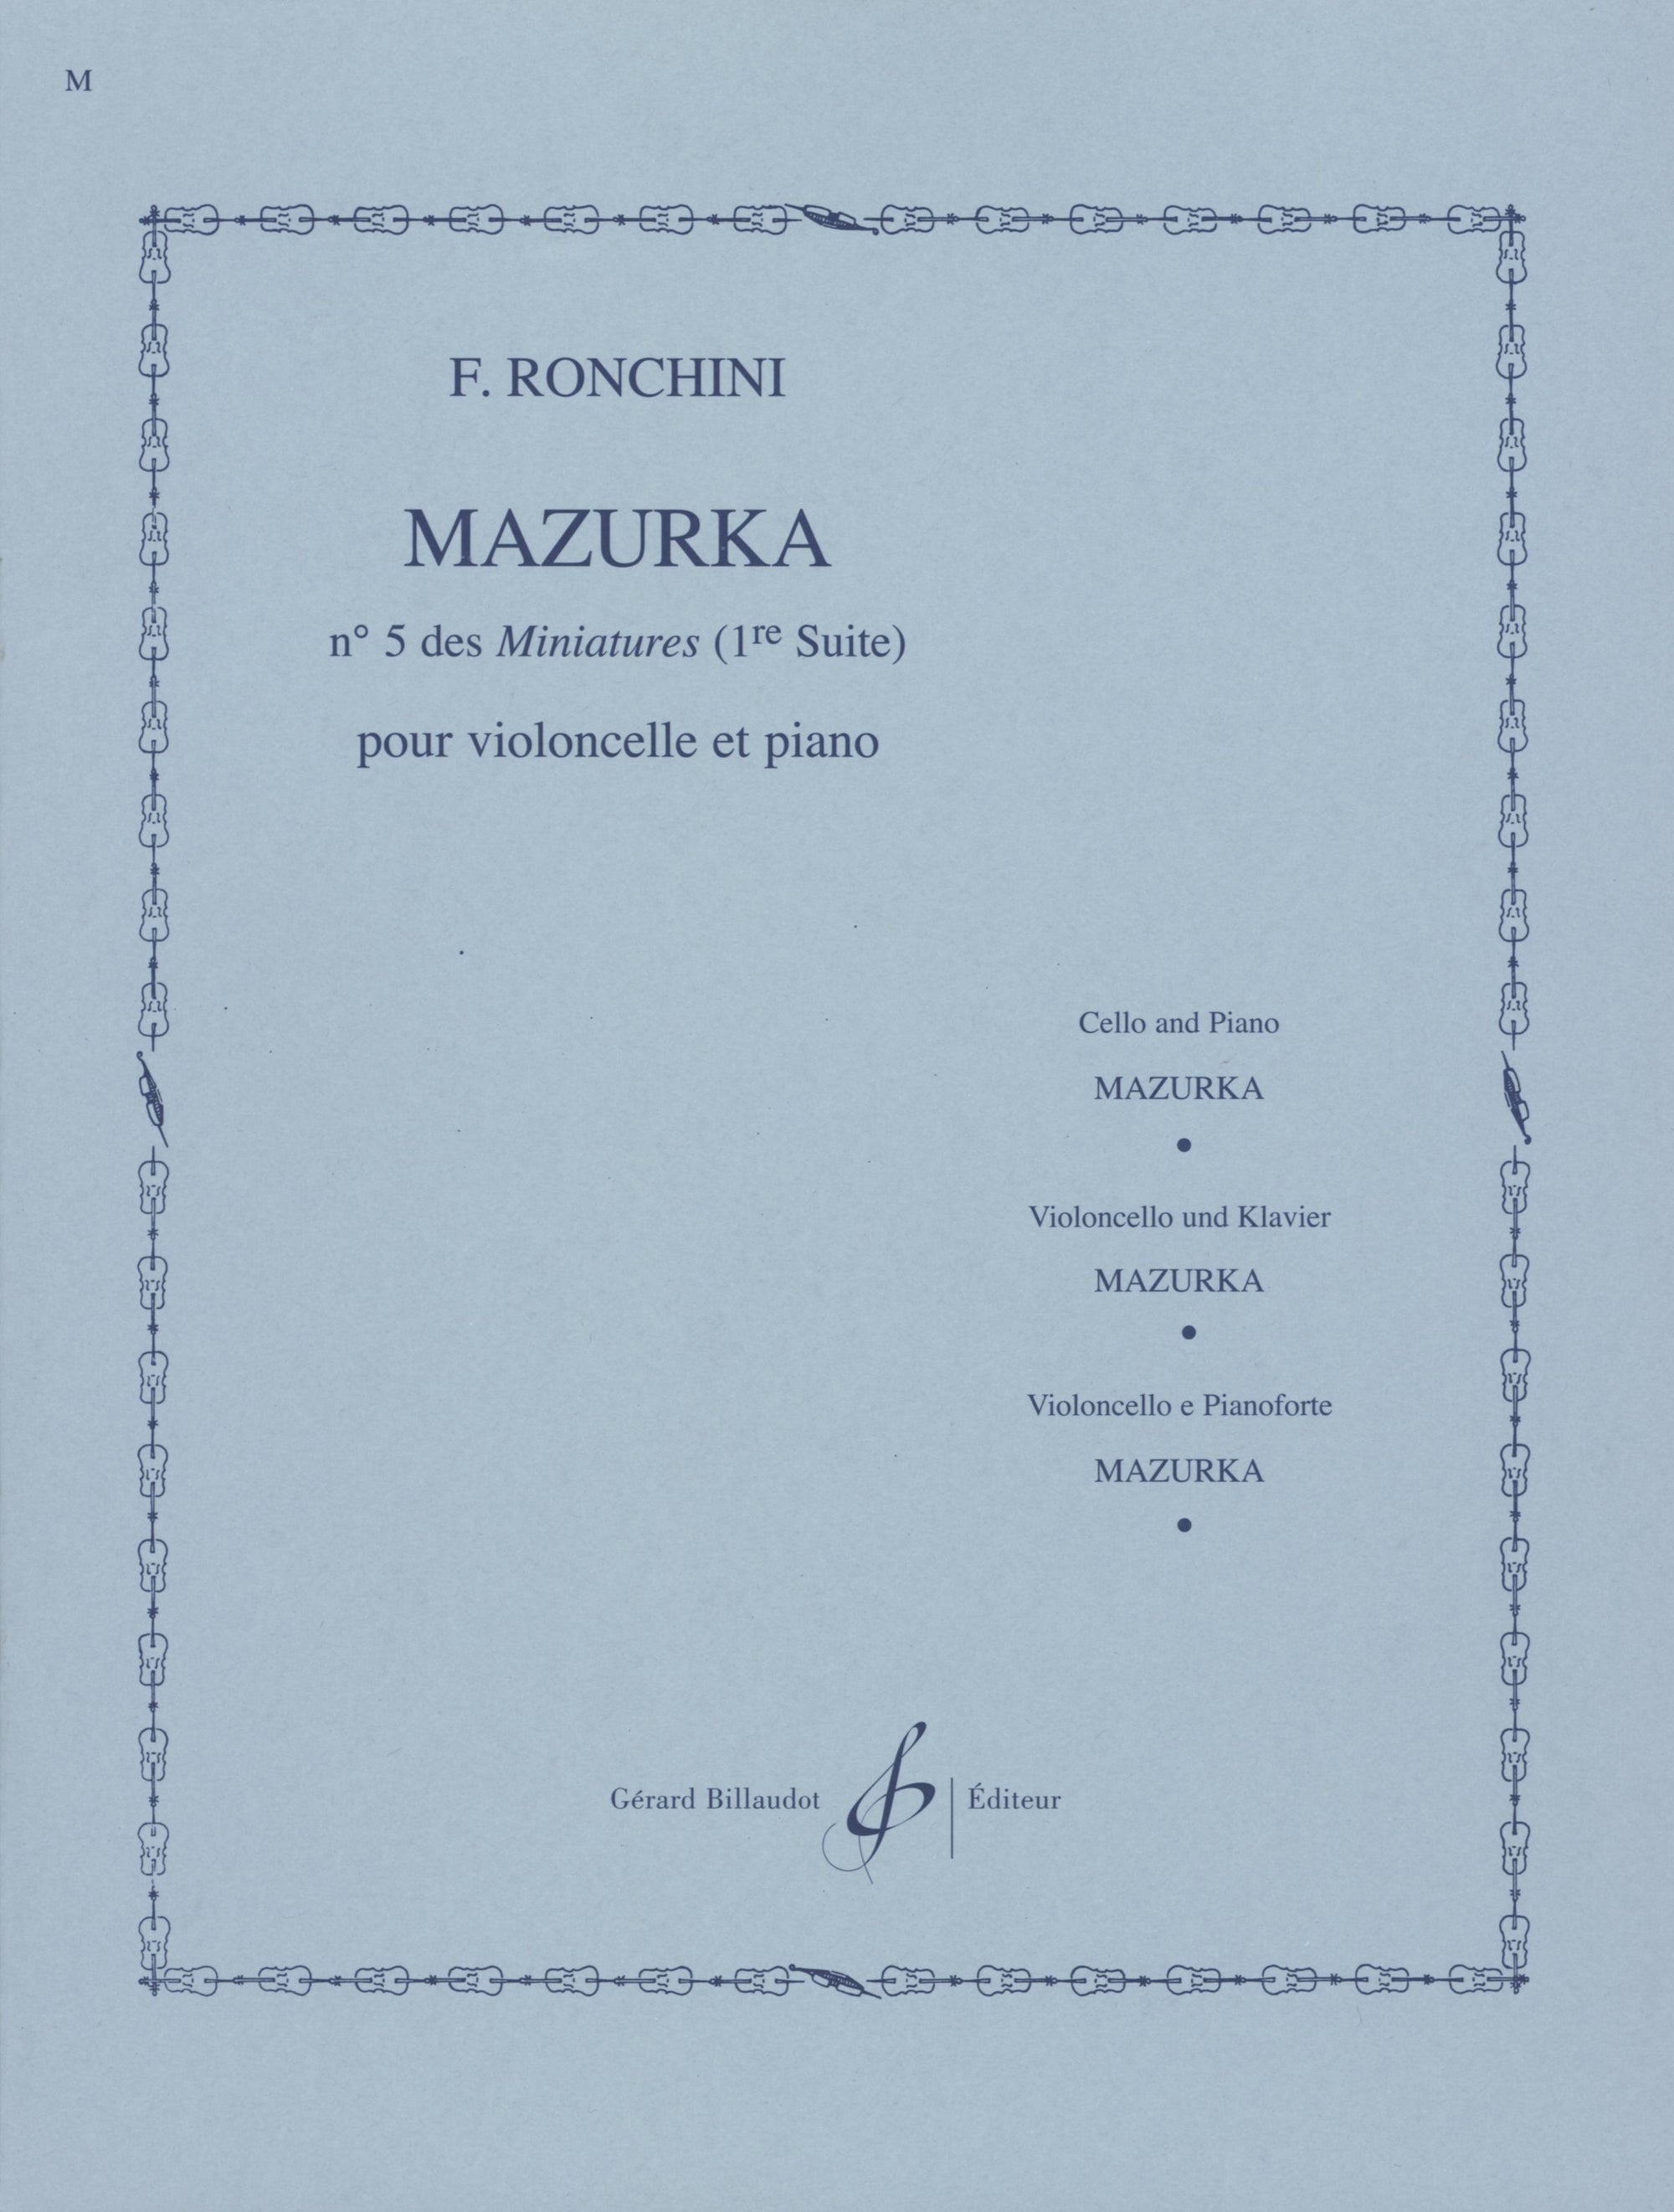 Ronchini: Mazurka